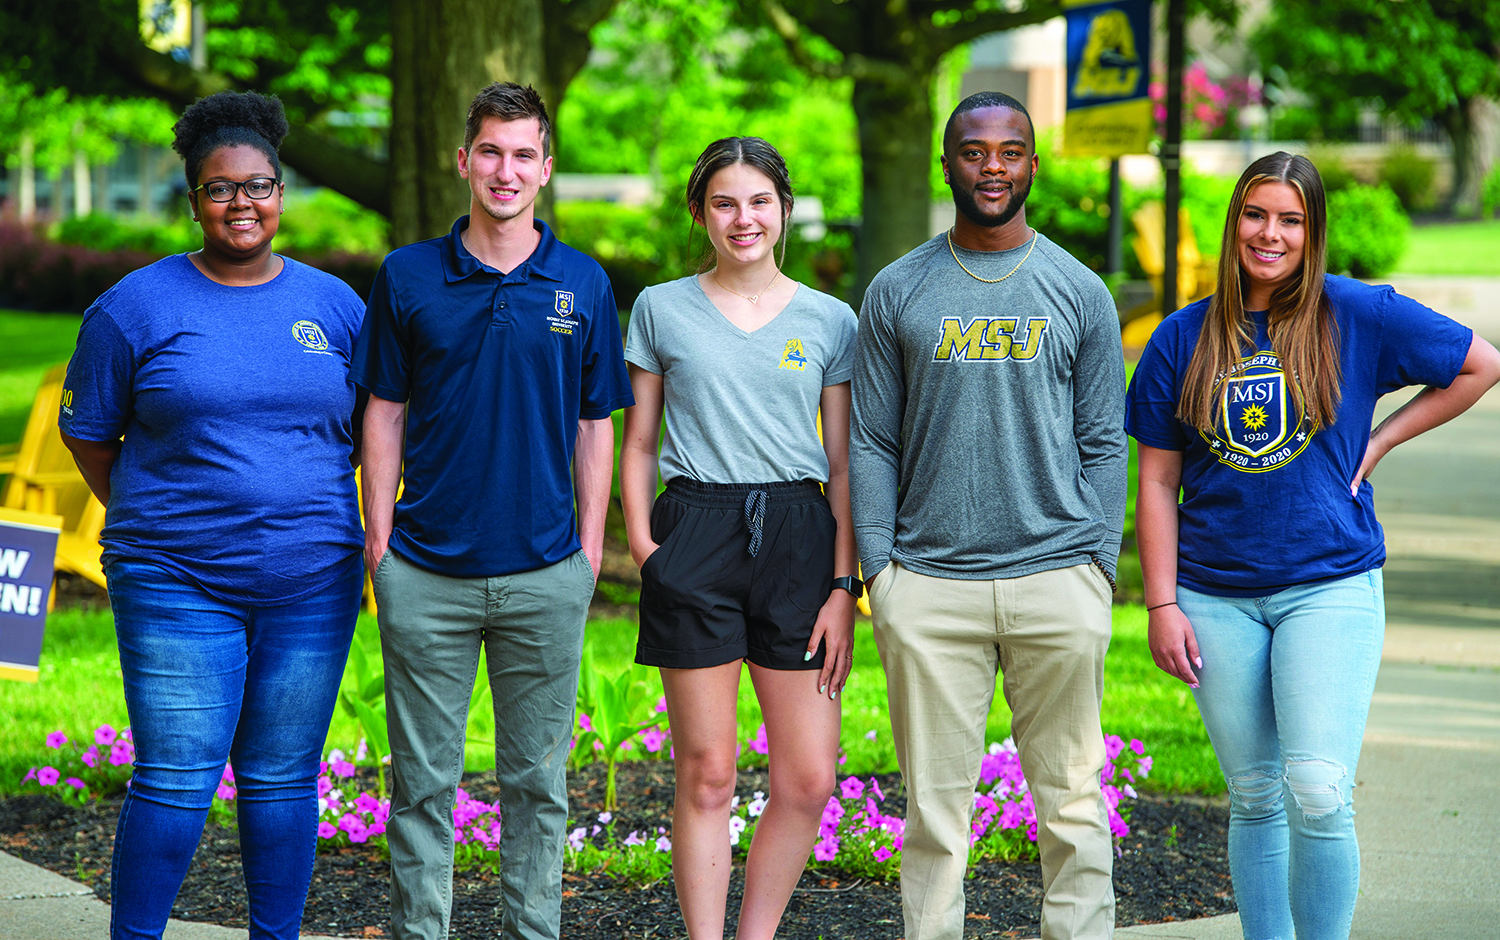 Mount St. Joseph University students smiling in quad.